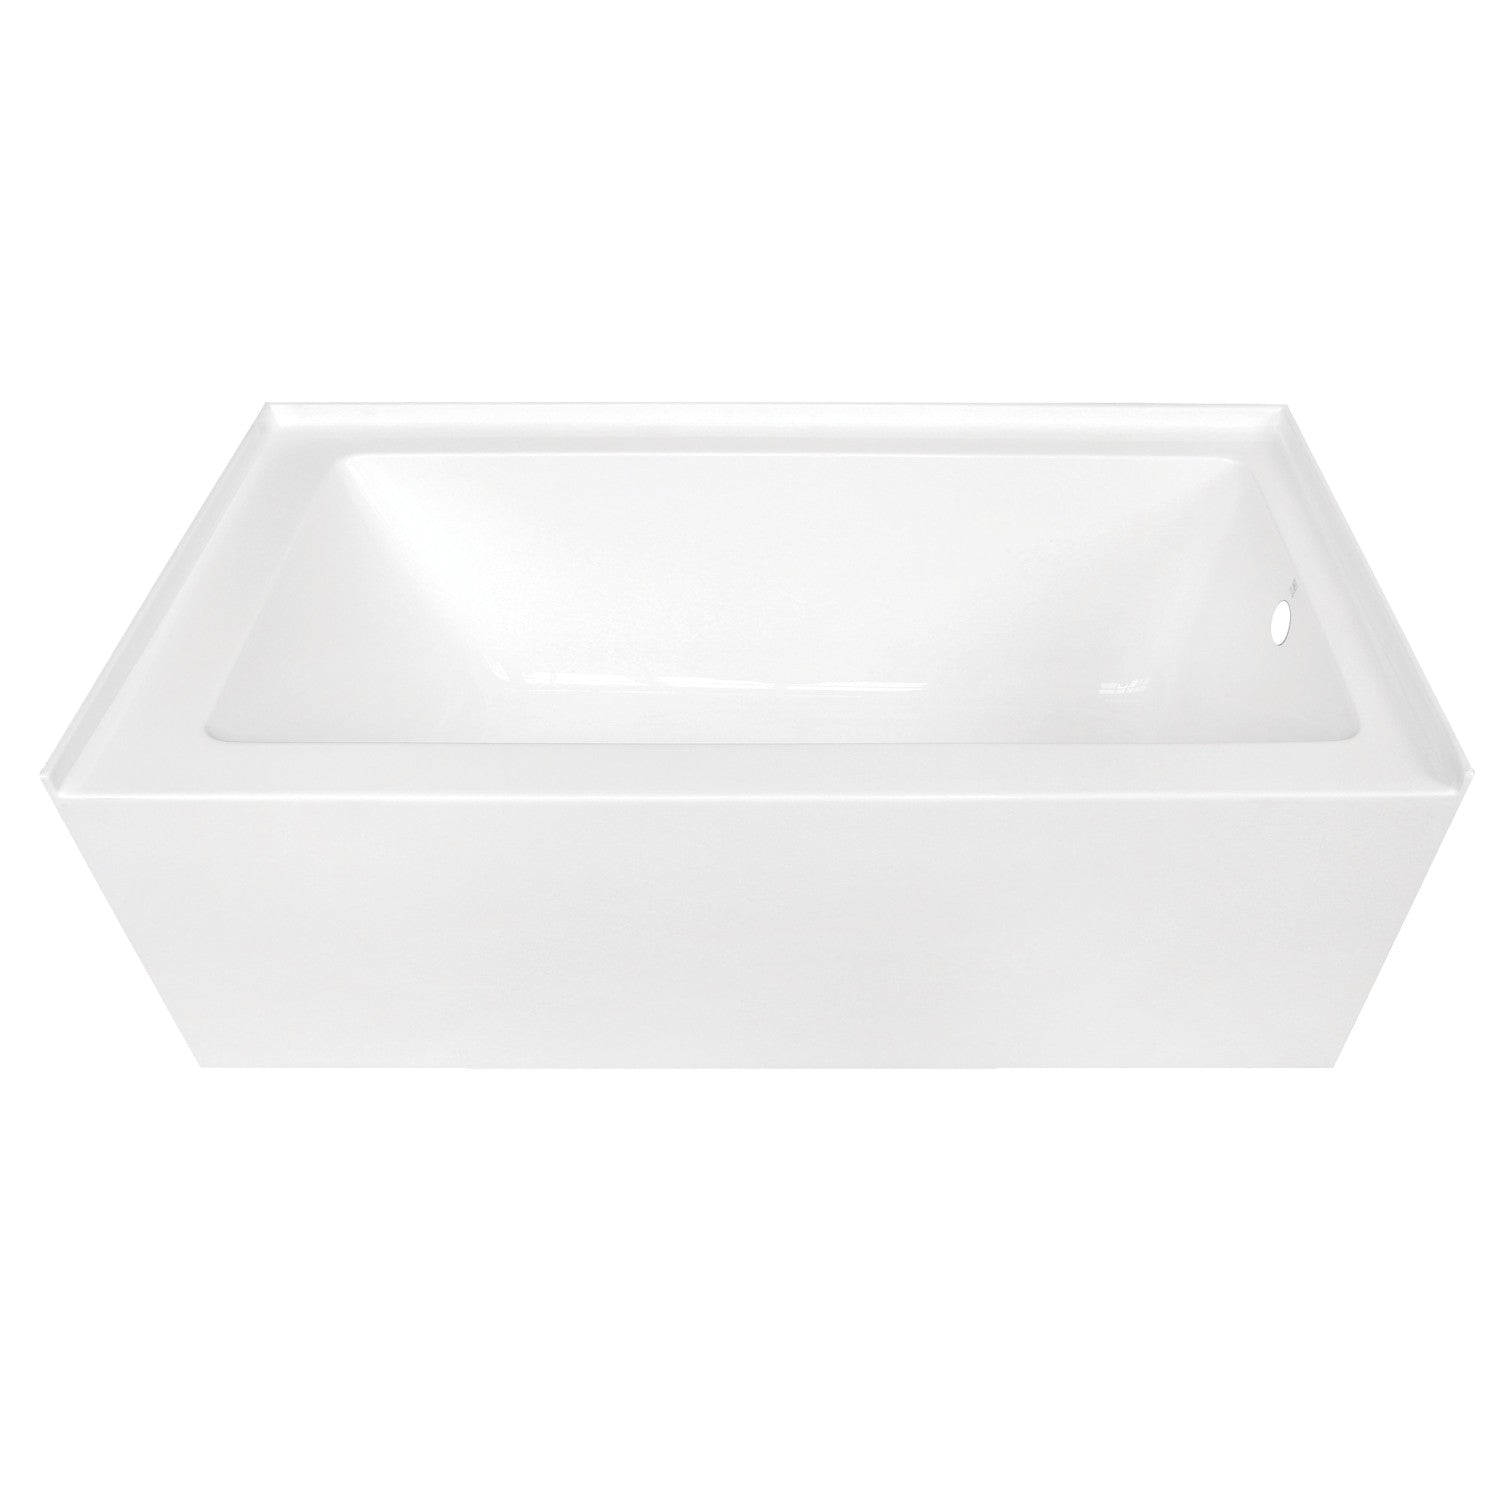 Aqua Eden VTDE603122R 60-Inch Acrylic Alcove Tub with Right Hand Drain  Hole, White